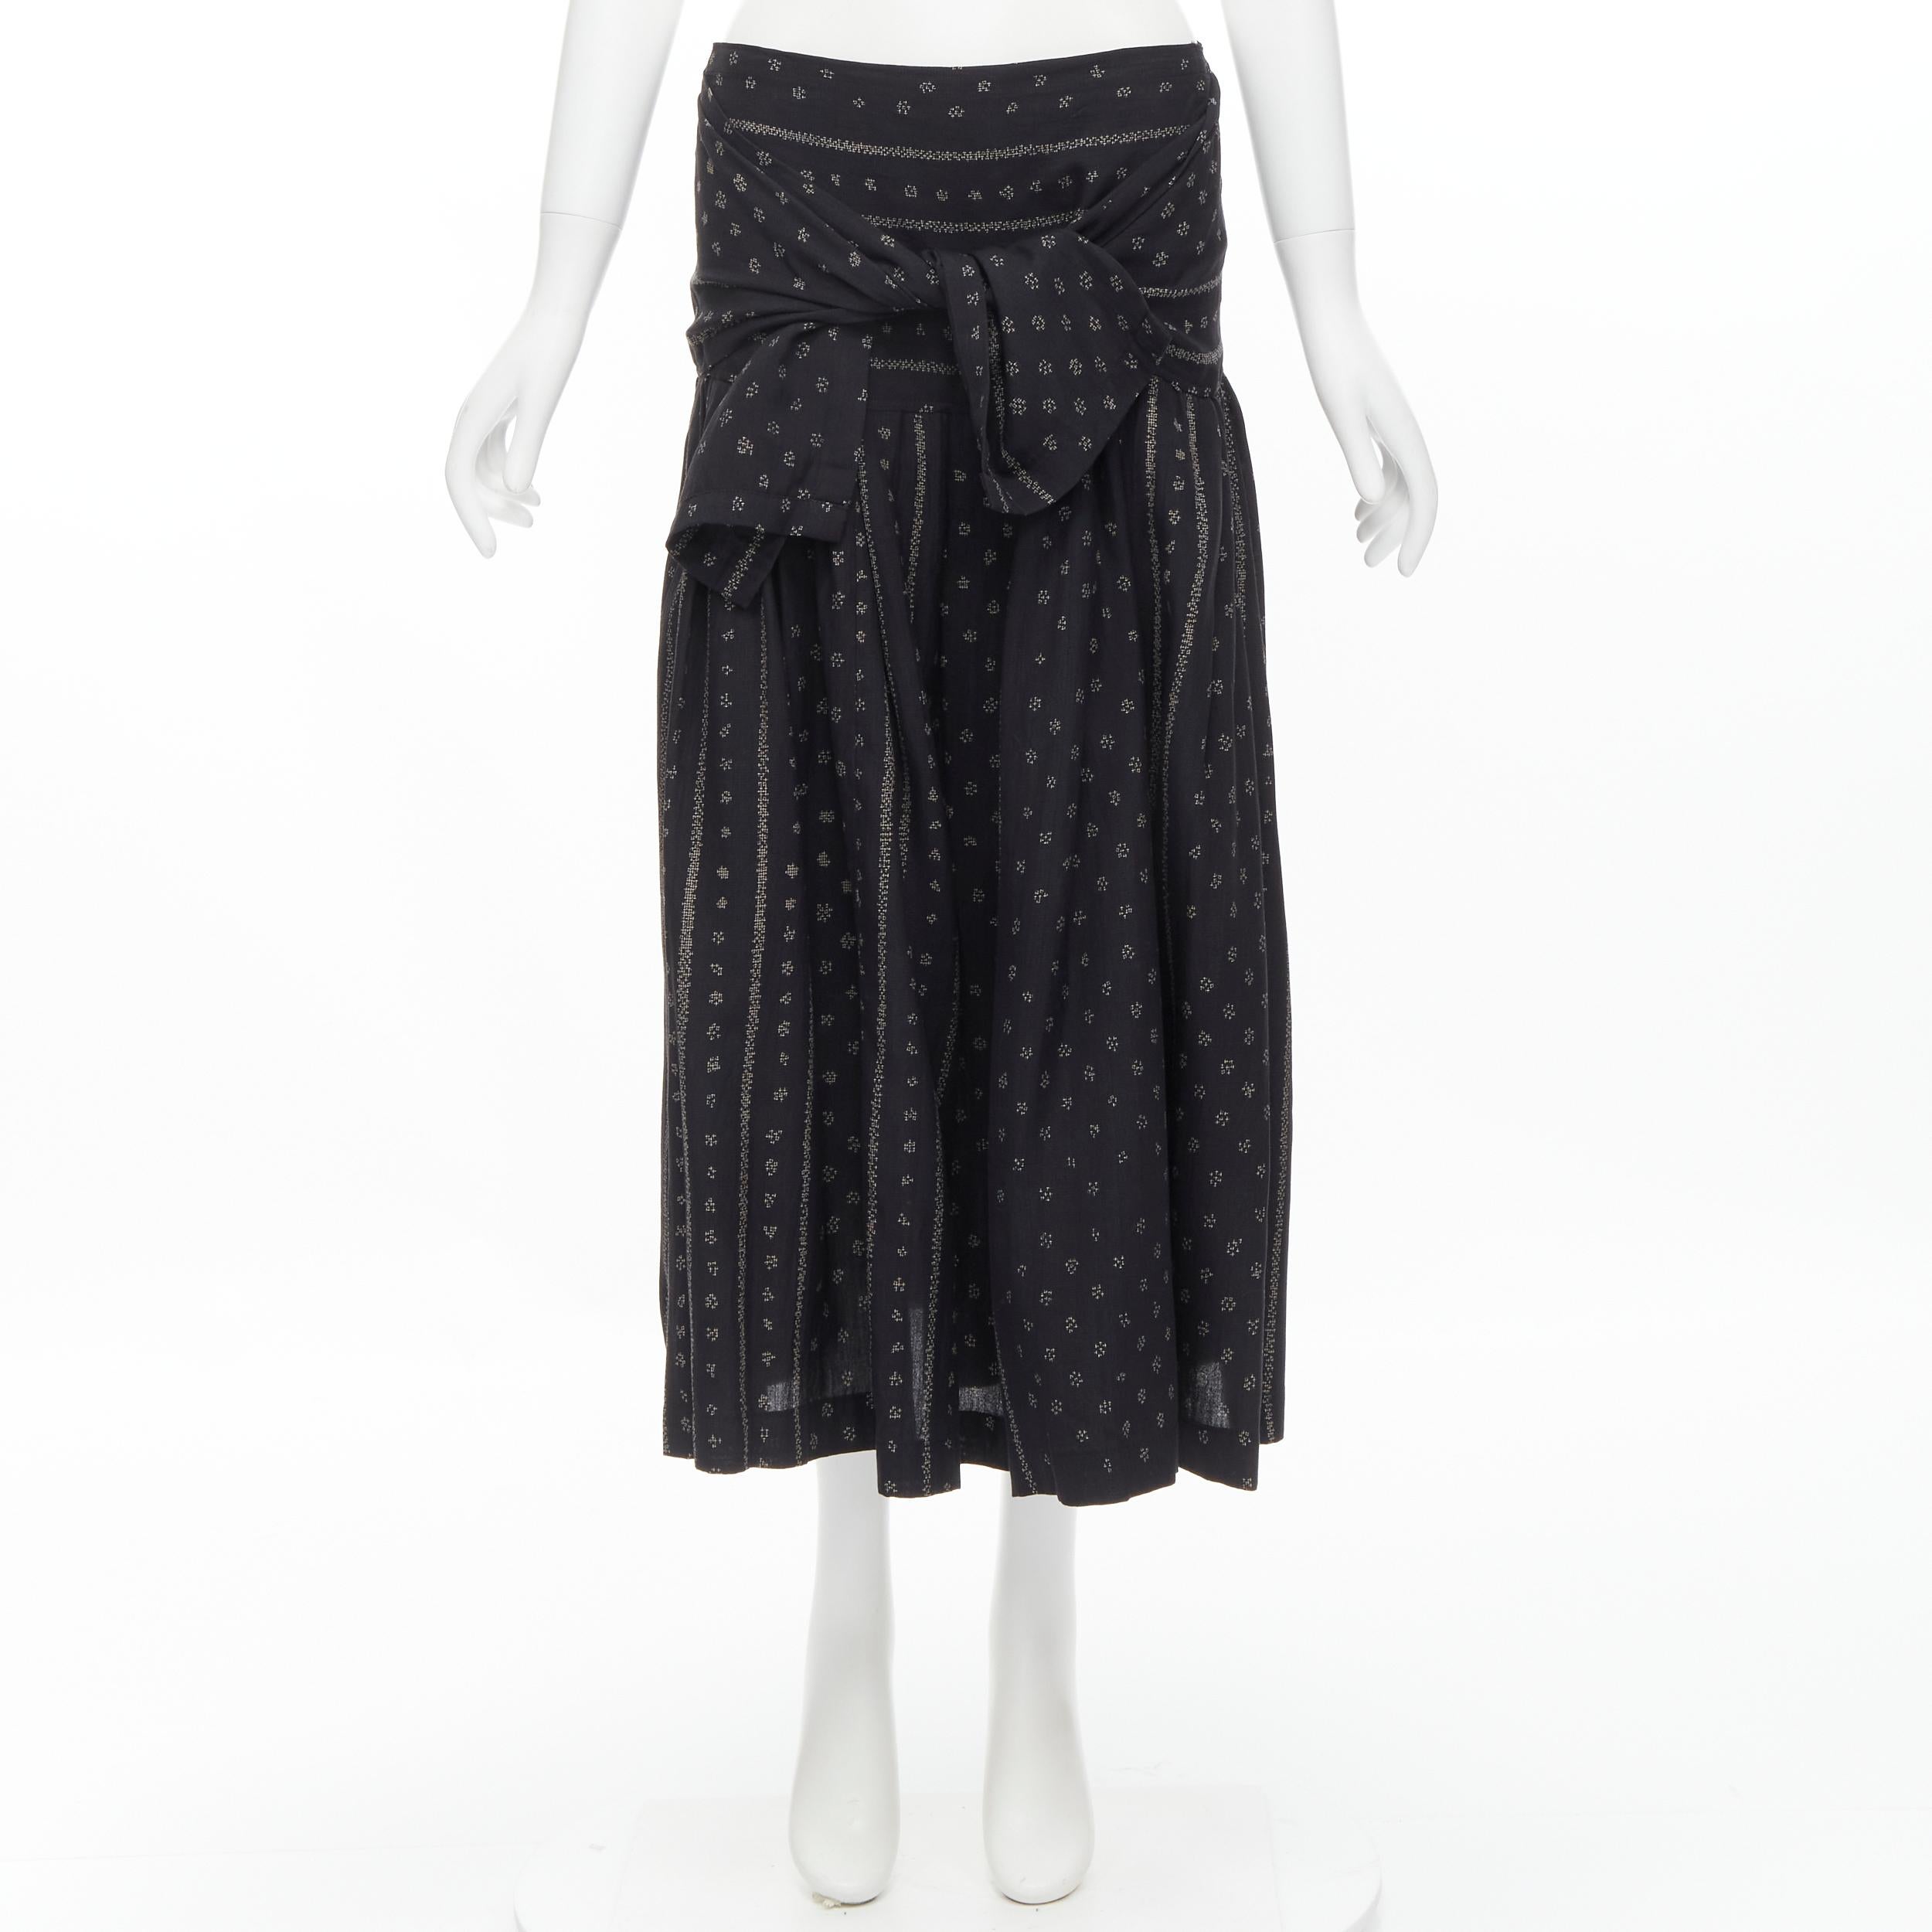 TRICOT COMME DES GARCONS black Ethnic Bohemian floral jacquard flared skirt S For Sale 5